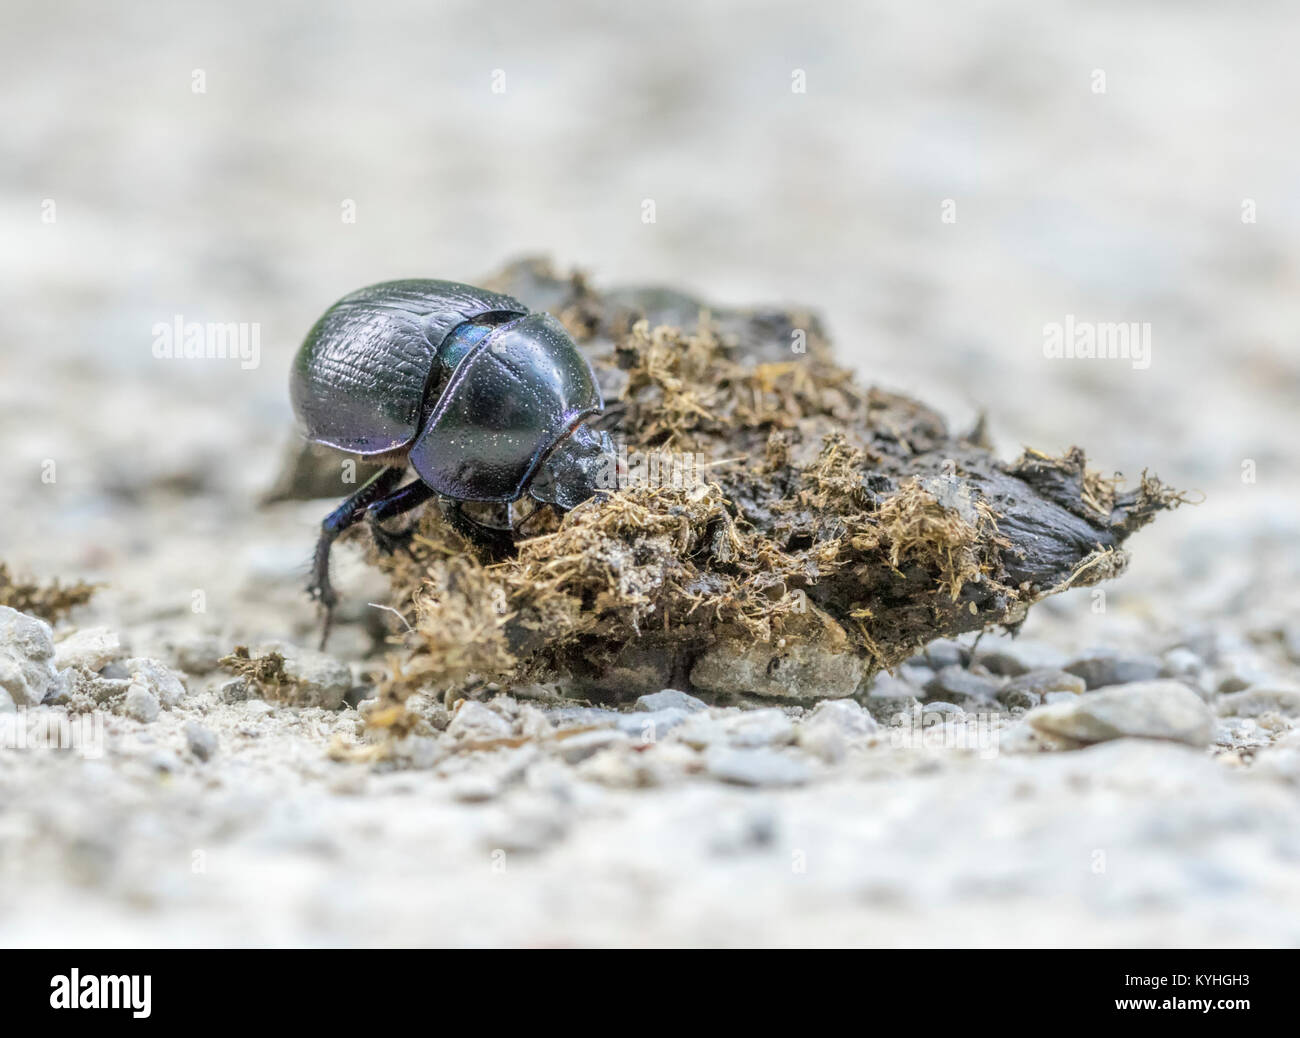 Angolo basso closeup shot che mostra un dung beetle con sterco Foto Stock